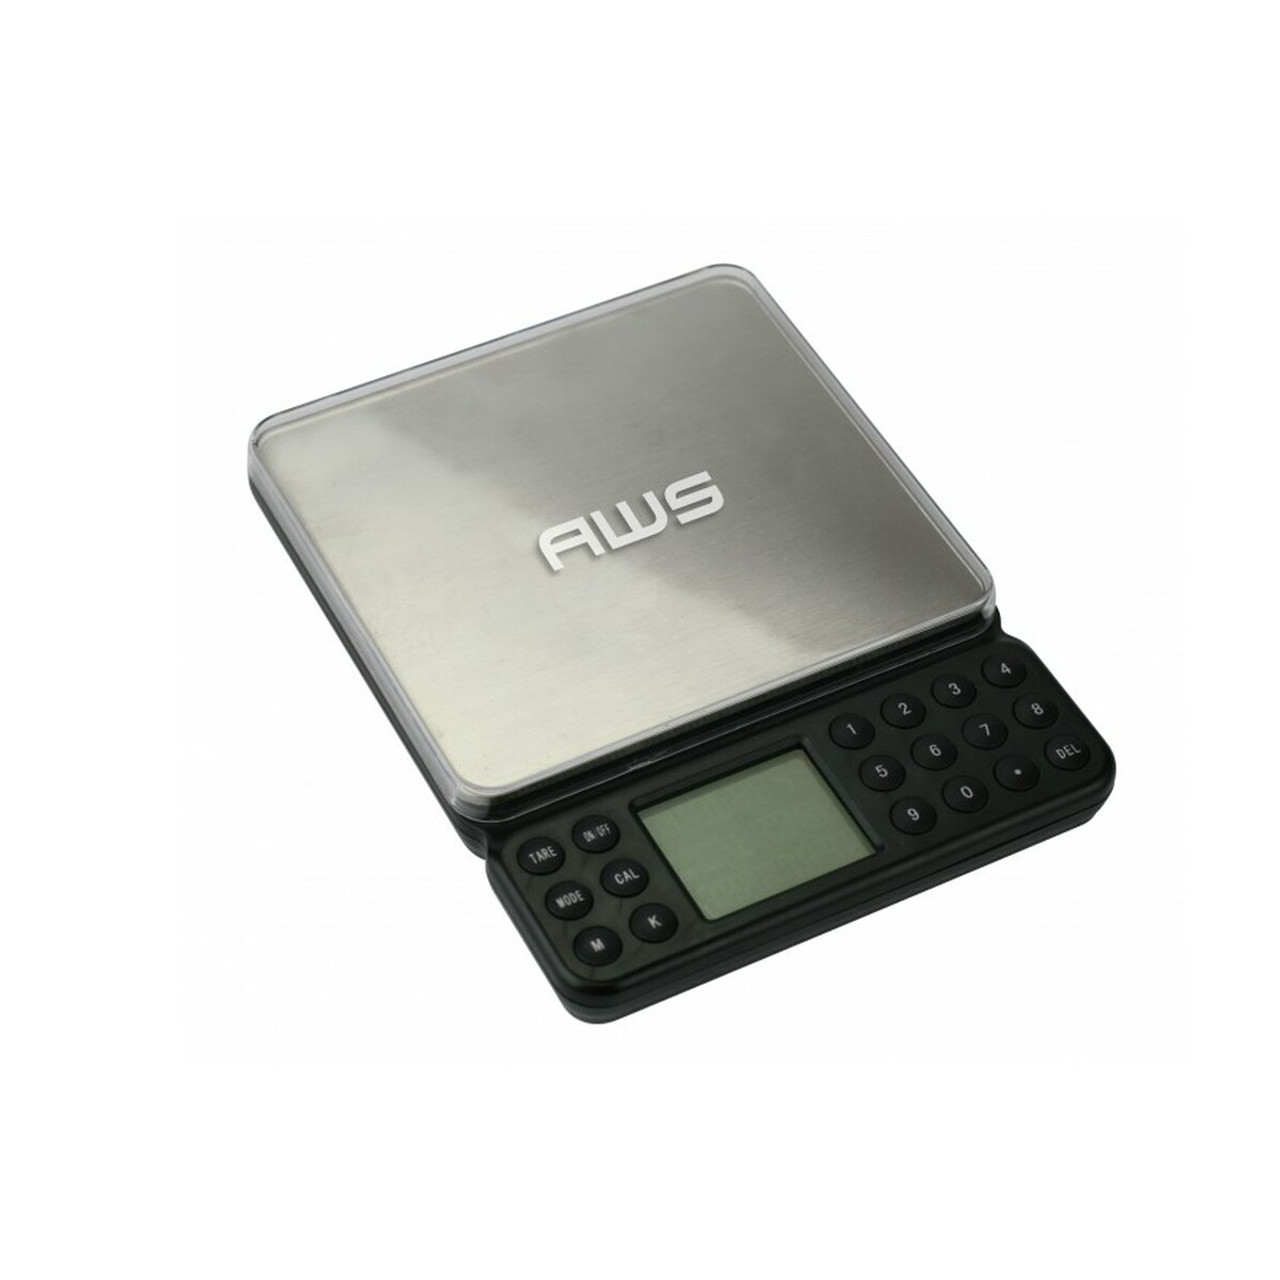 Buy American Weigh BT2-201 Digital Pocket Scale - 200x0.01g online